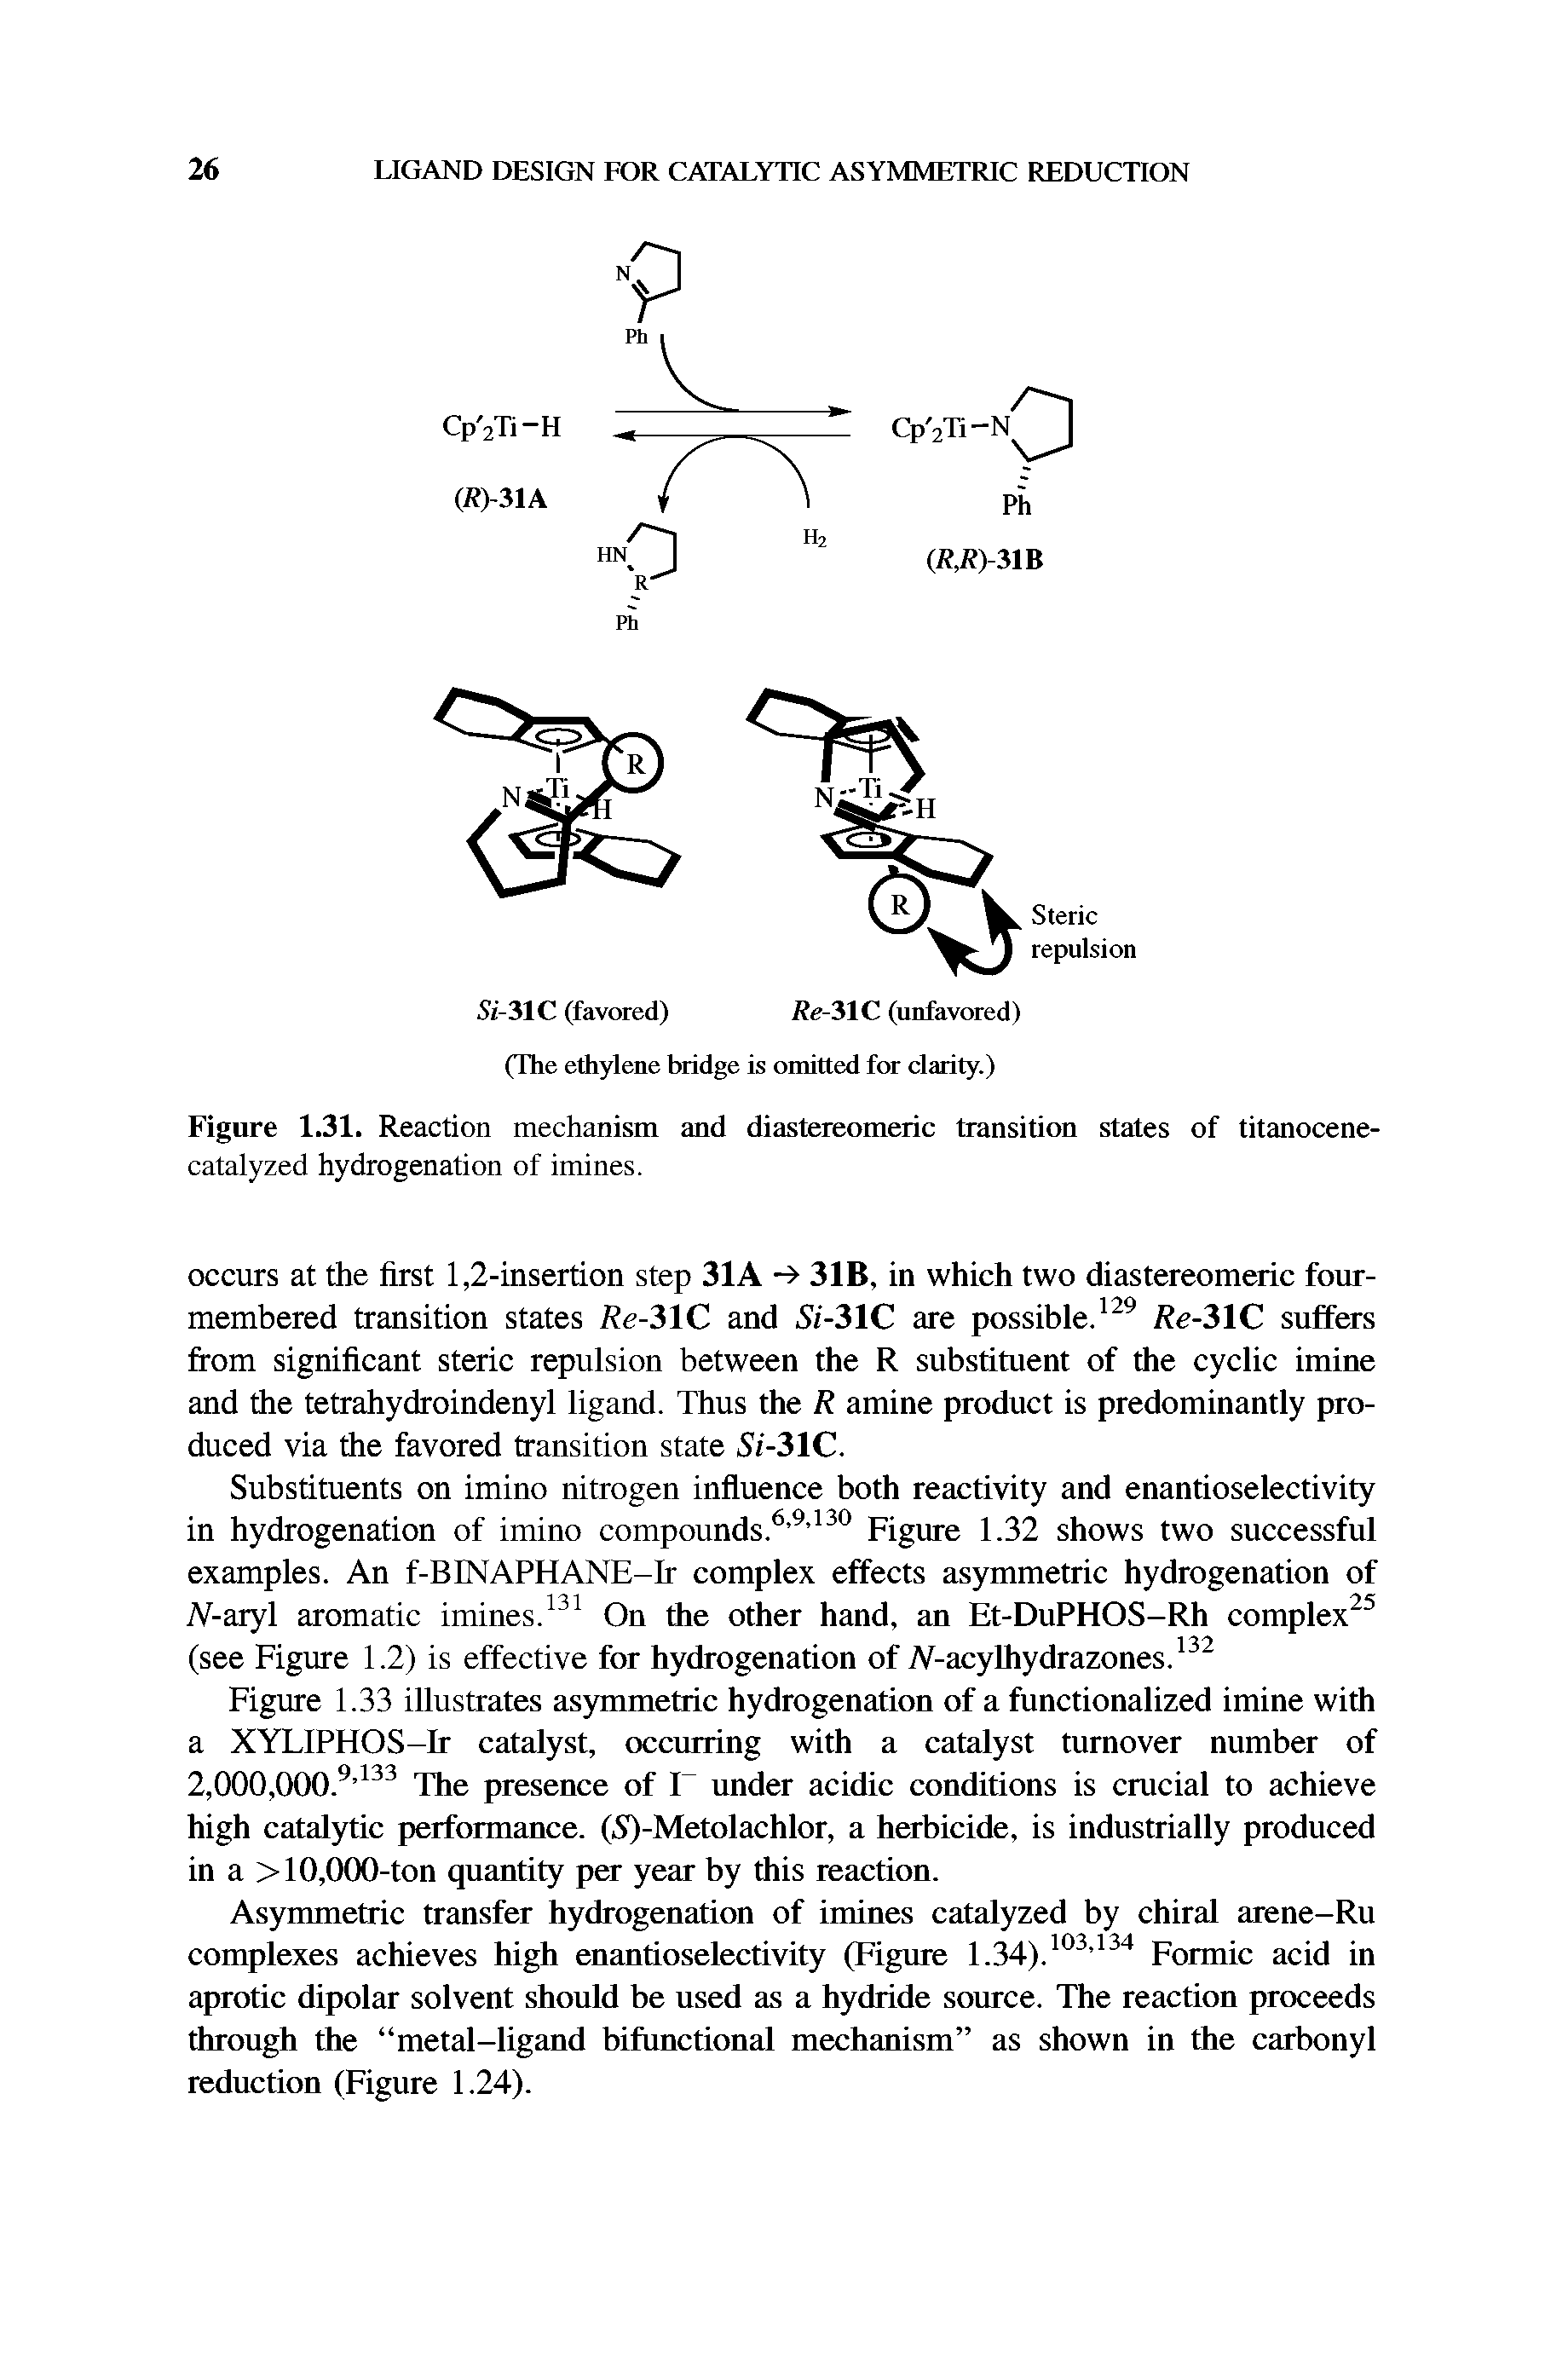 Figure 1.31. Reaction mechanism and diastereomeric transition states of titanocene-catalyzed hydrogenation of imines.